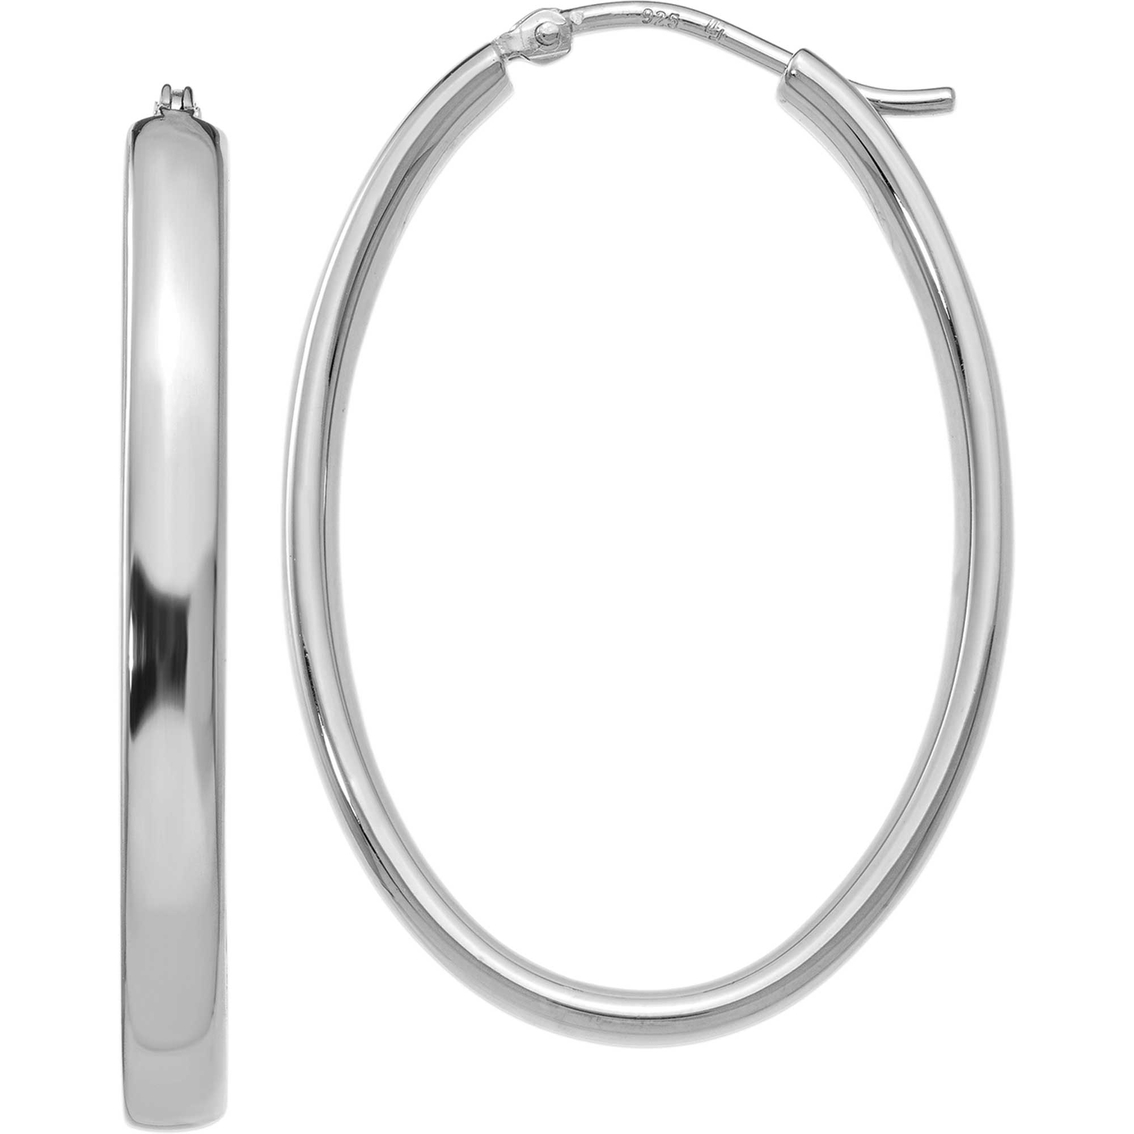 Sterling Silver Polished Oval Hoop Earrings - Image 2 of 2